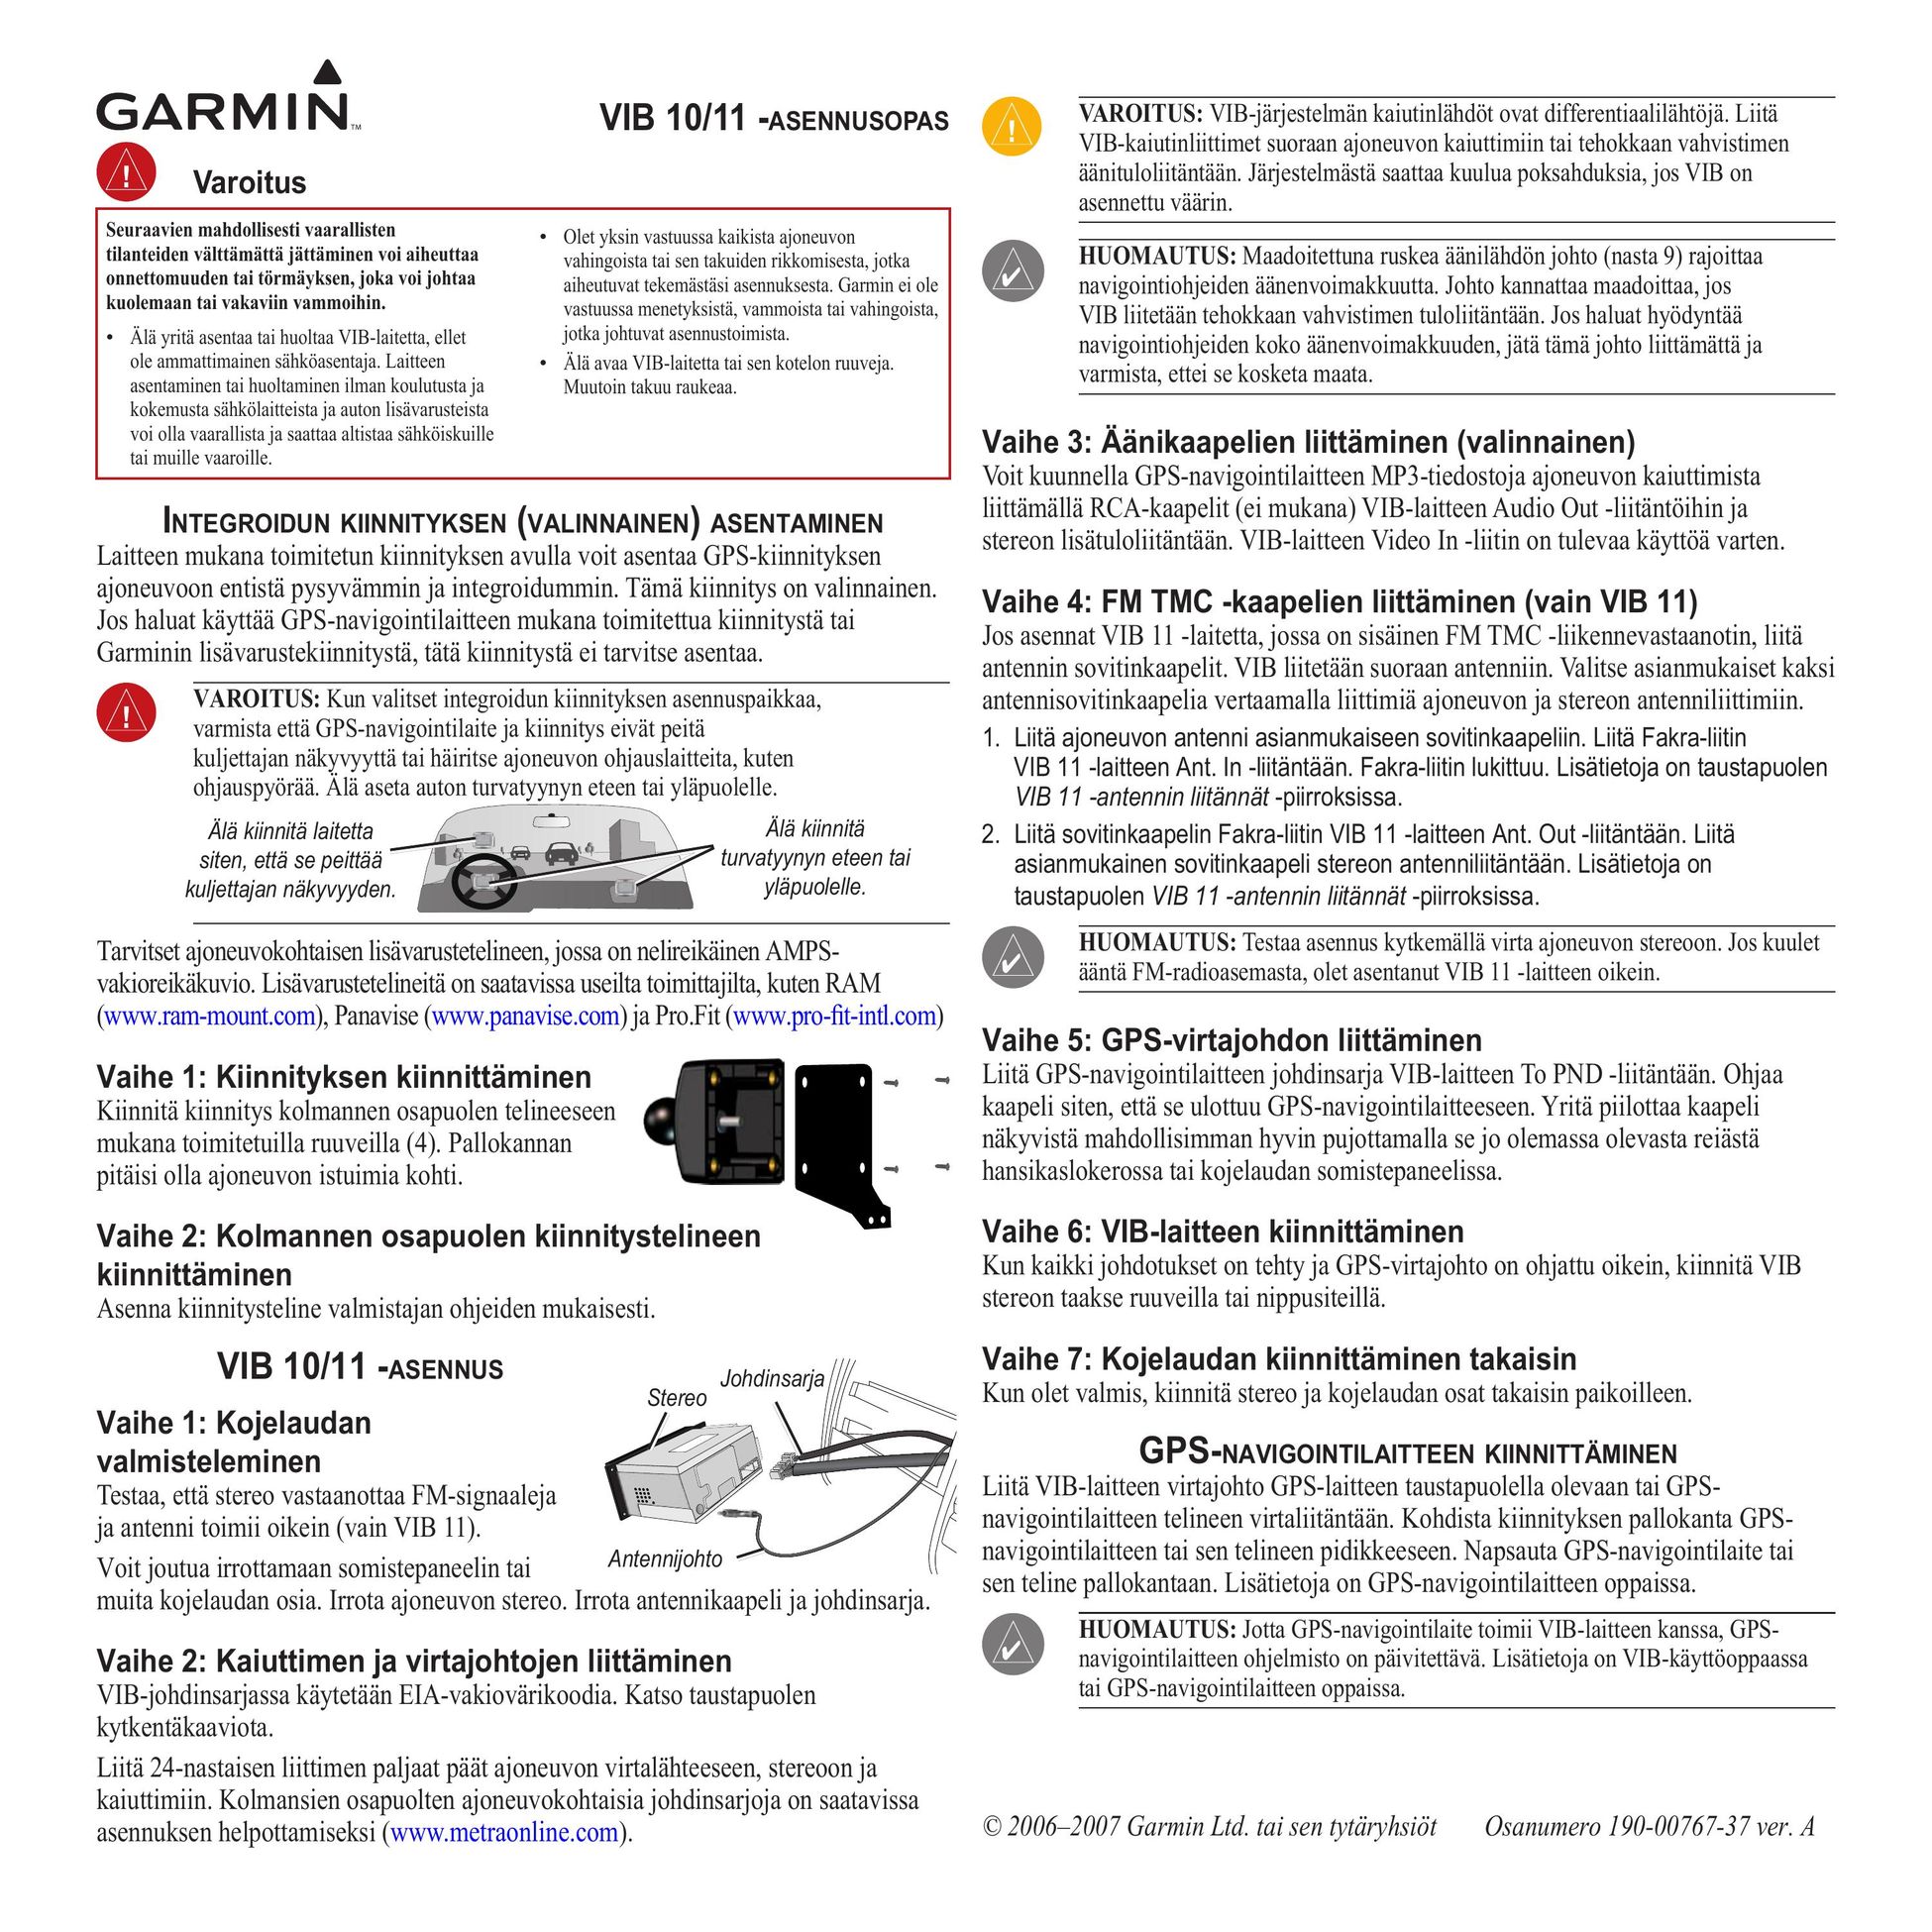 Garmin VIB10/11 Headphones User Manual